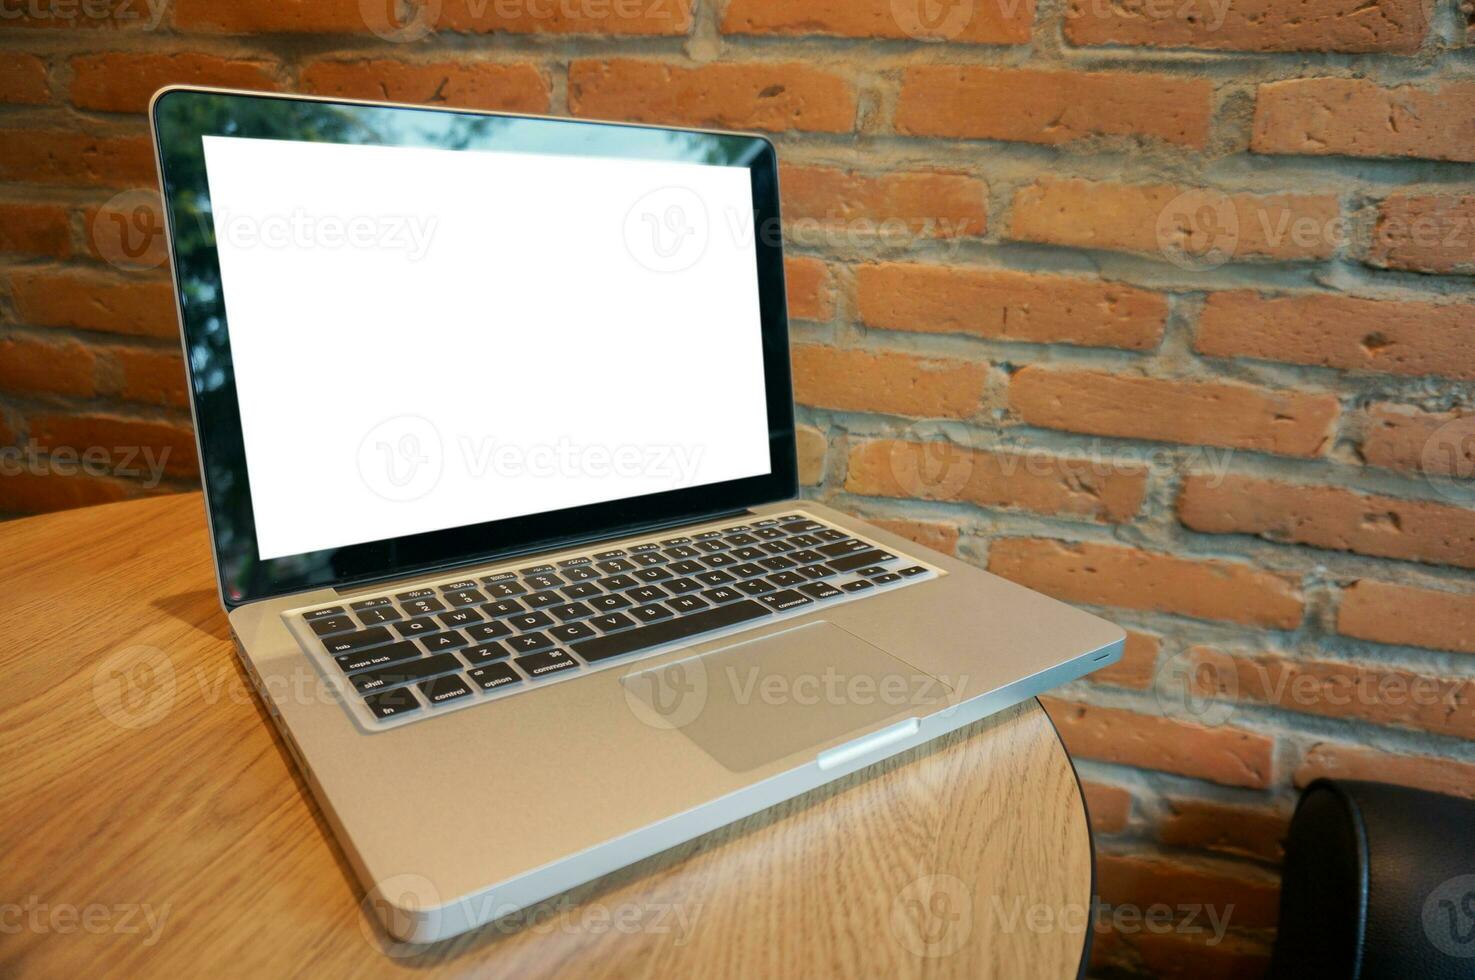 ordenador portátil con burlarse de arriba blanco pantalla en de madera mesa en frente de café espacio para texto. producto monitor computadora ordenador portátil montaje- tecnología Lanza libre trabajo concepto foto